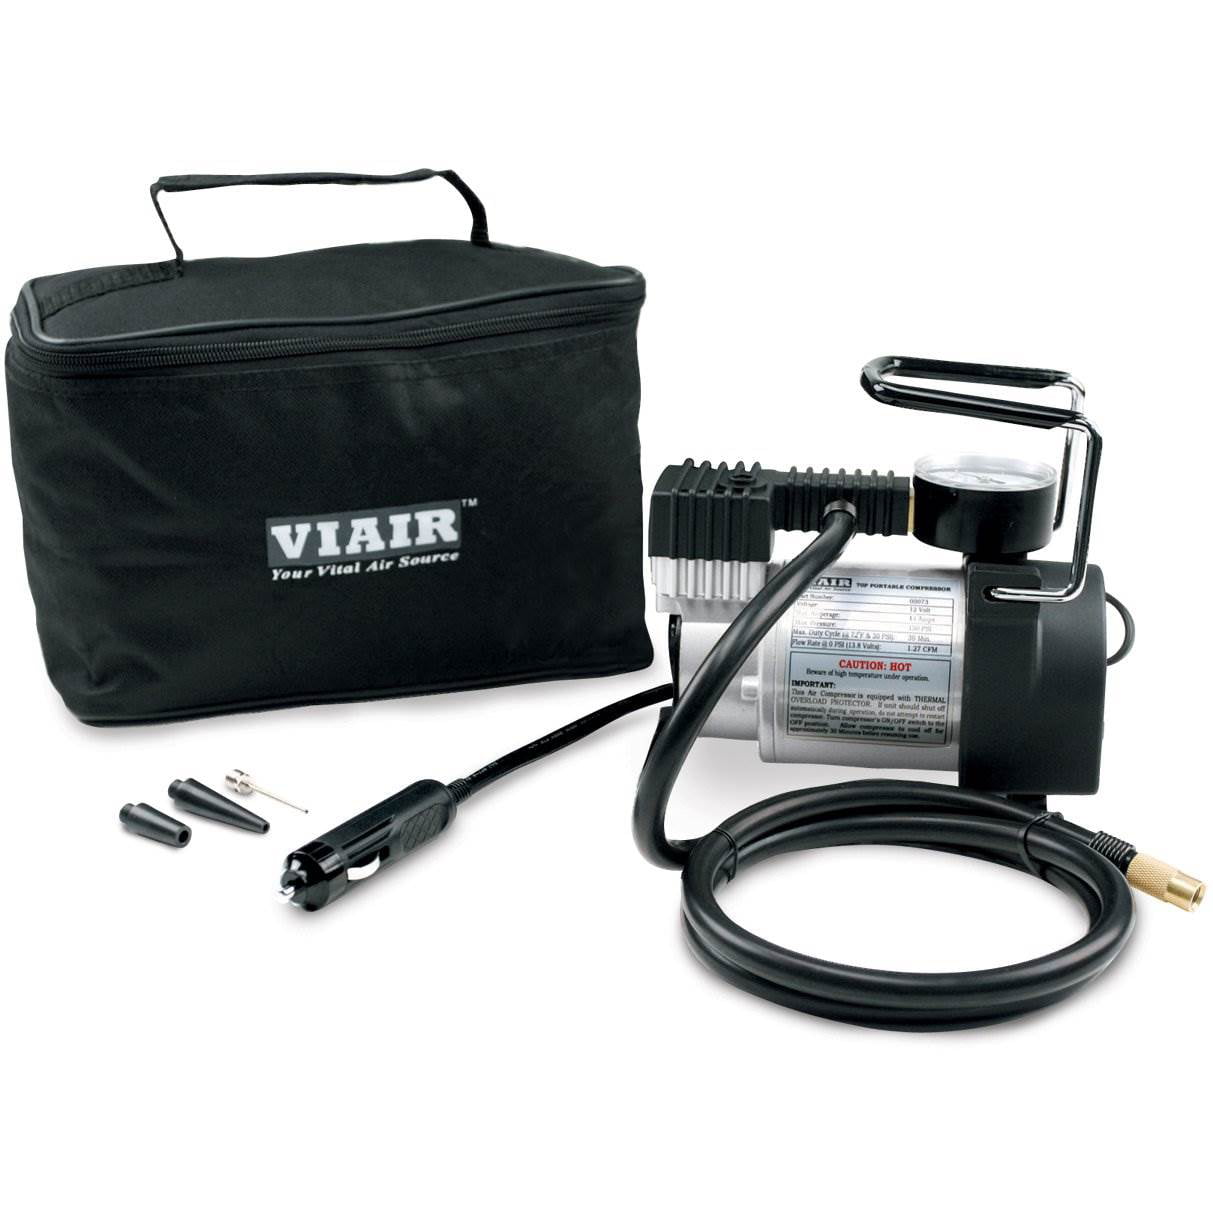 Viair 70P Portable 12V Air Compressor Kit Use For Passenger Car Tires 2 Pack 